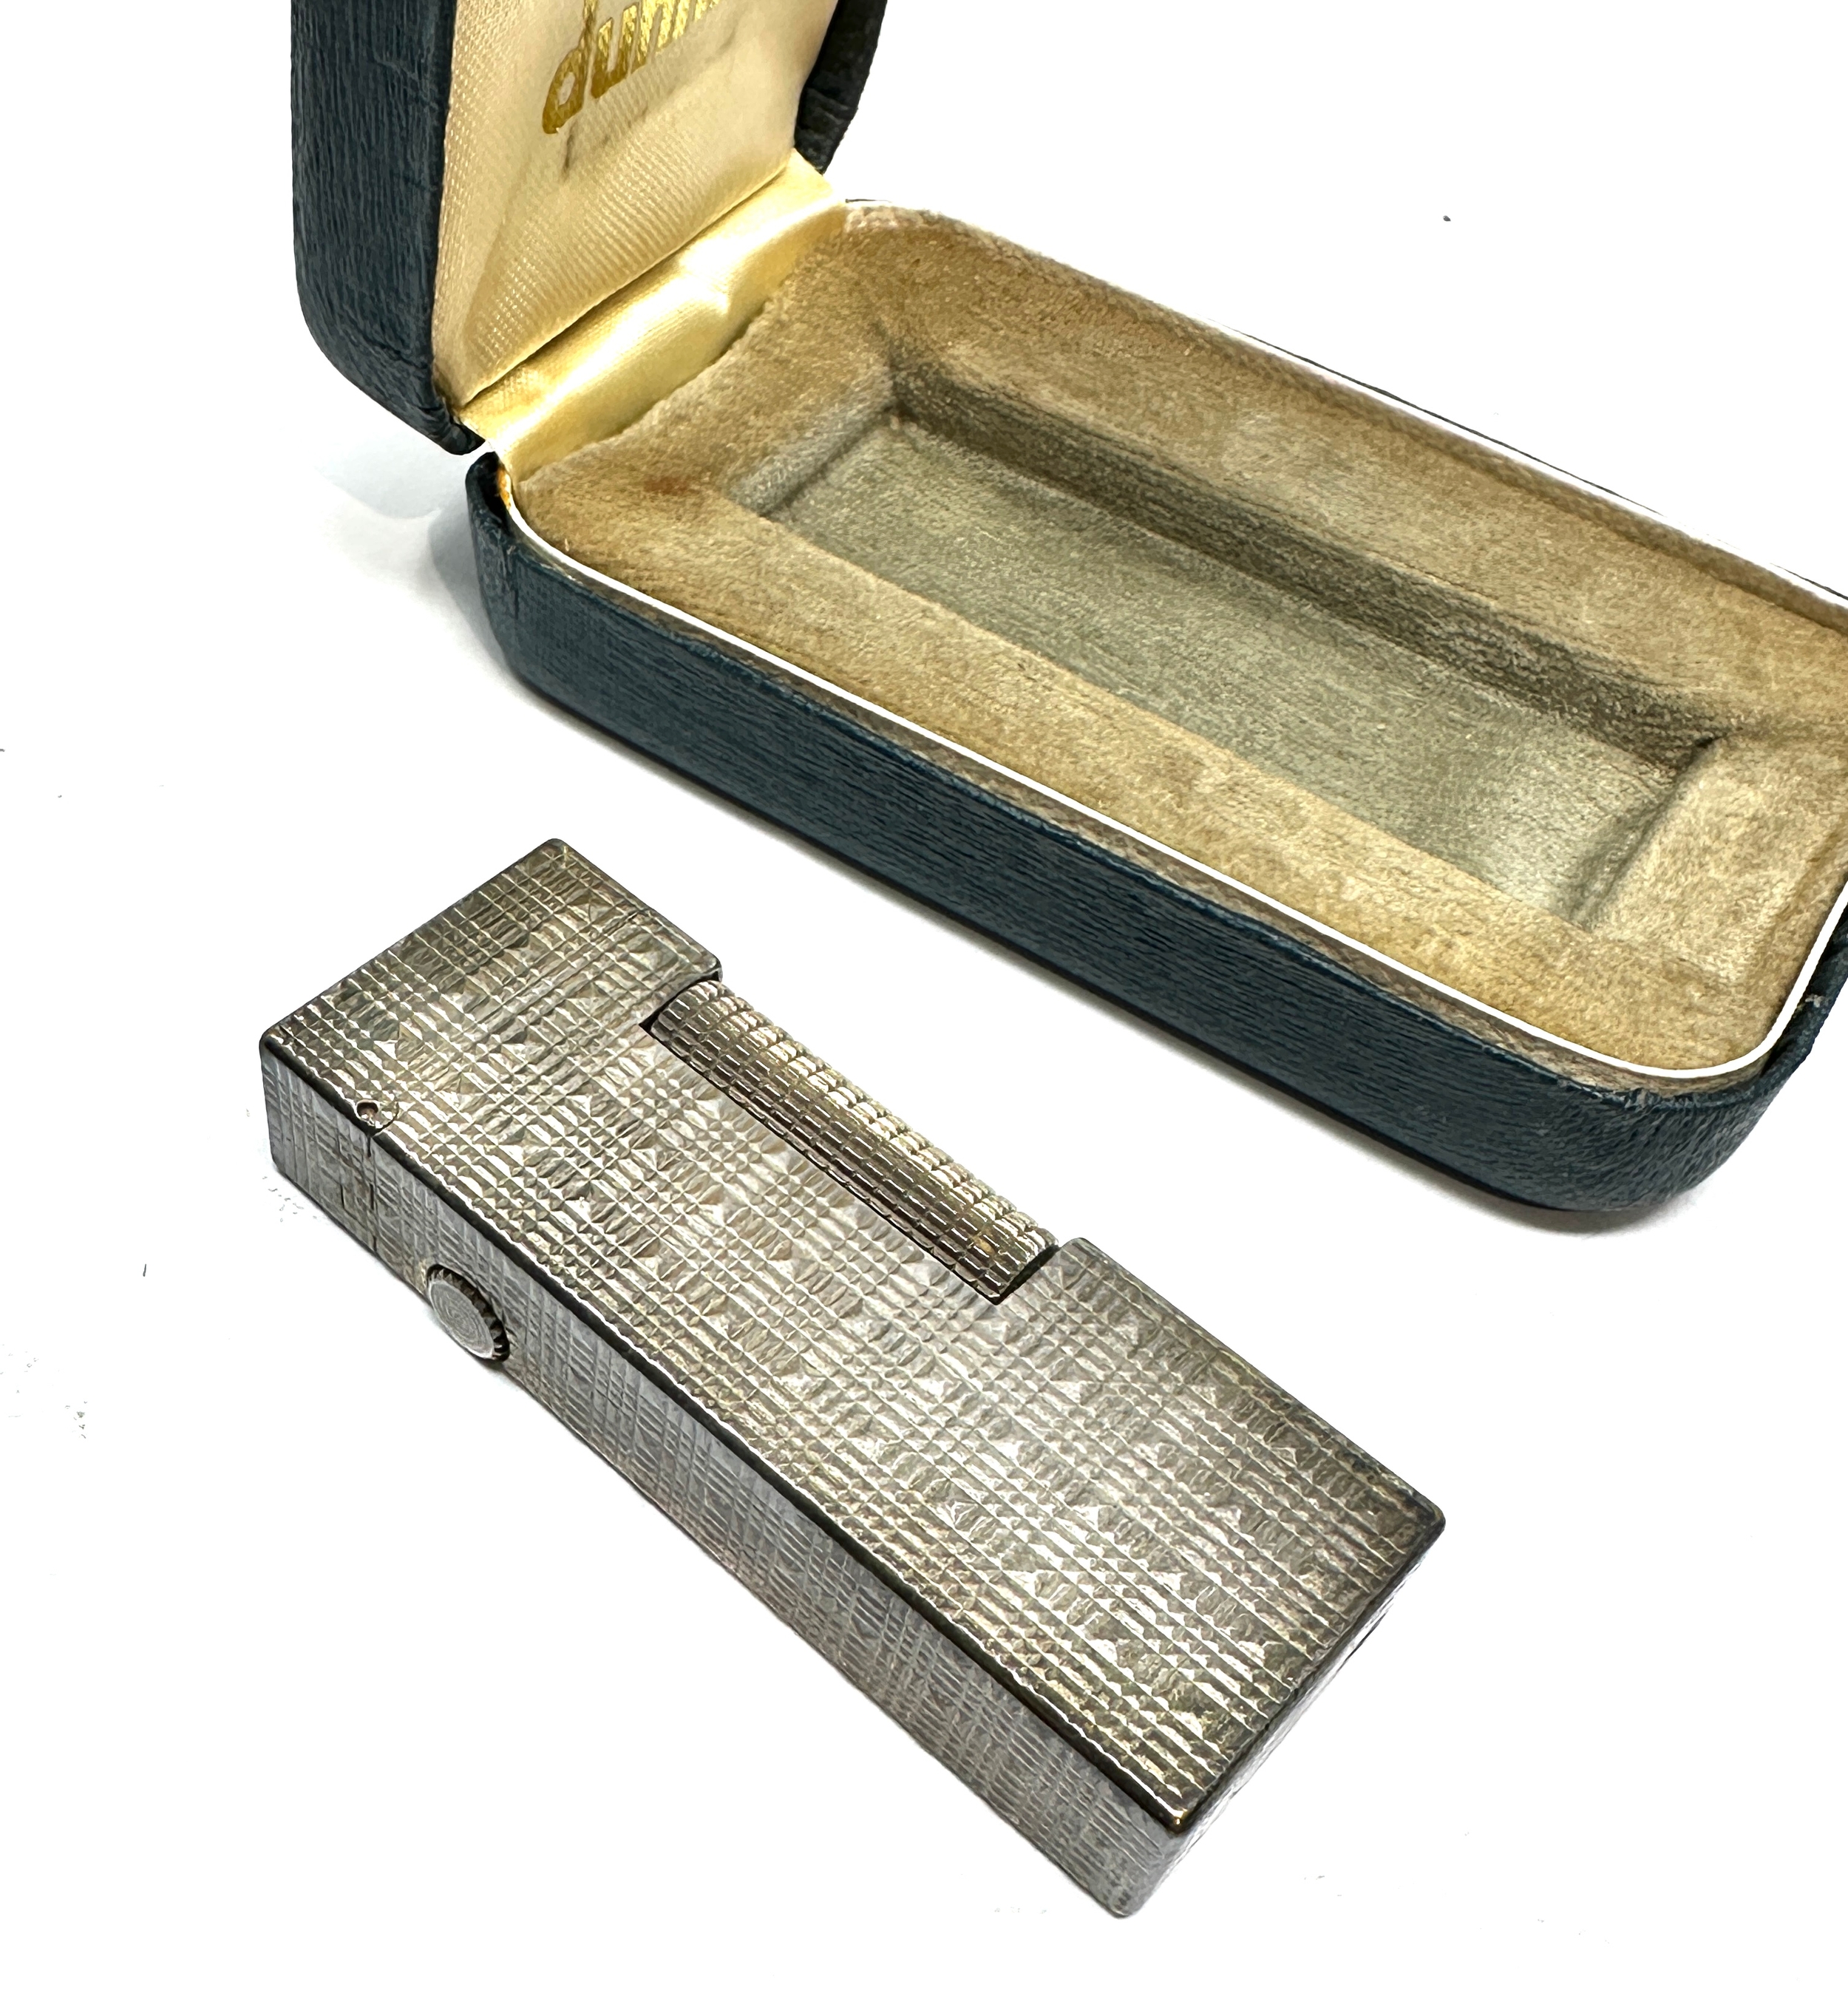 Boxed vintage Dunhill cigarette lighter - Image 2 of 4